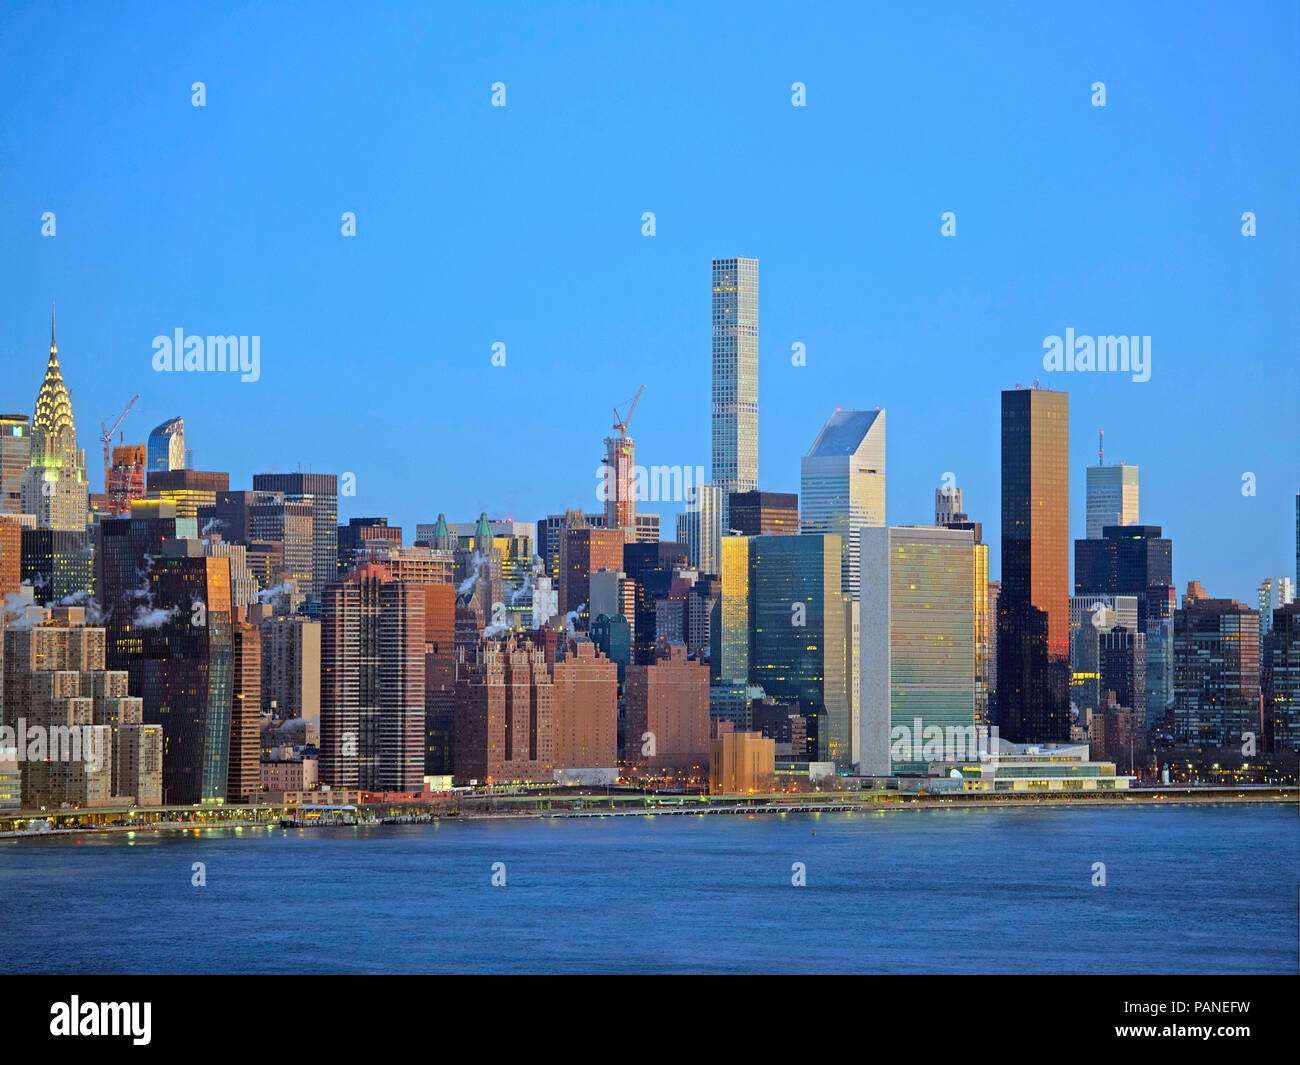 Manhattan skyline at sunset, New York, USA, 31 Décembre 2017 Photo © Fabio Mazzarella/Sintesi/Alamy Stock Photo Banque D'Images